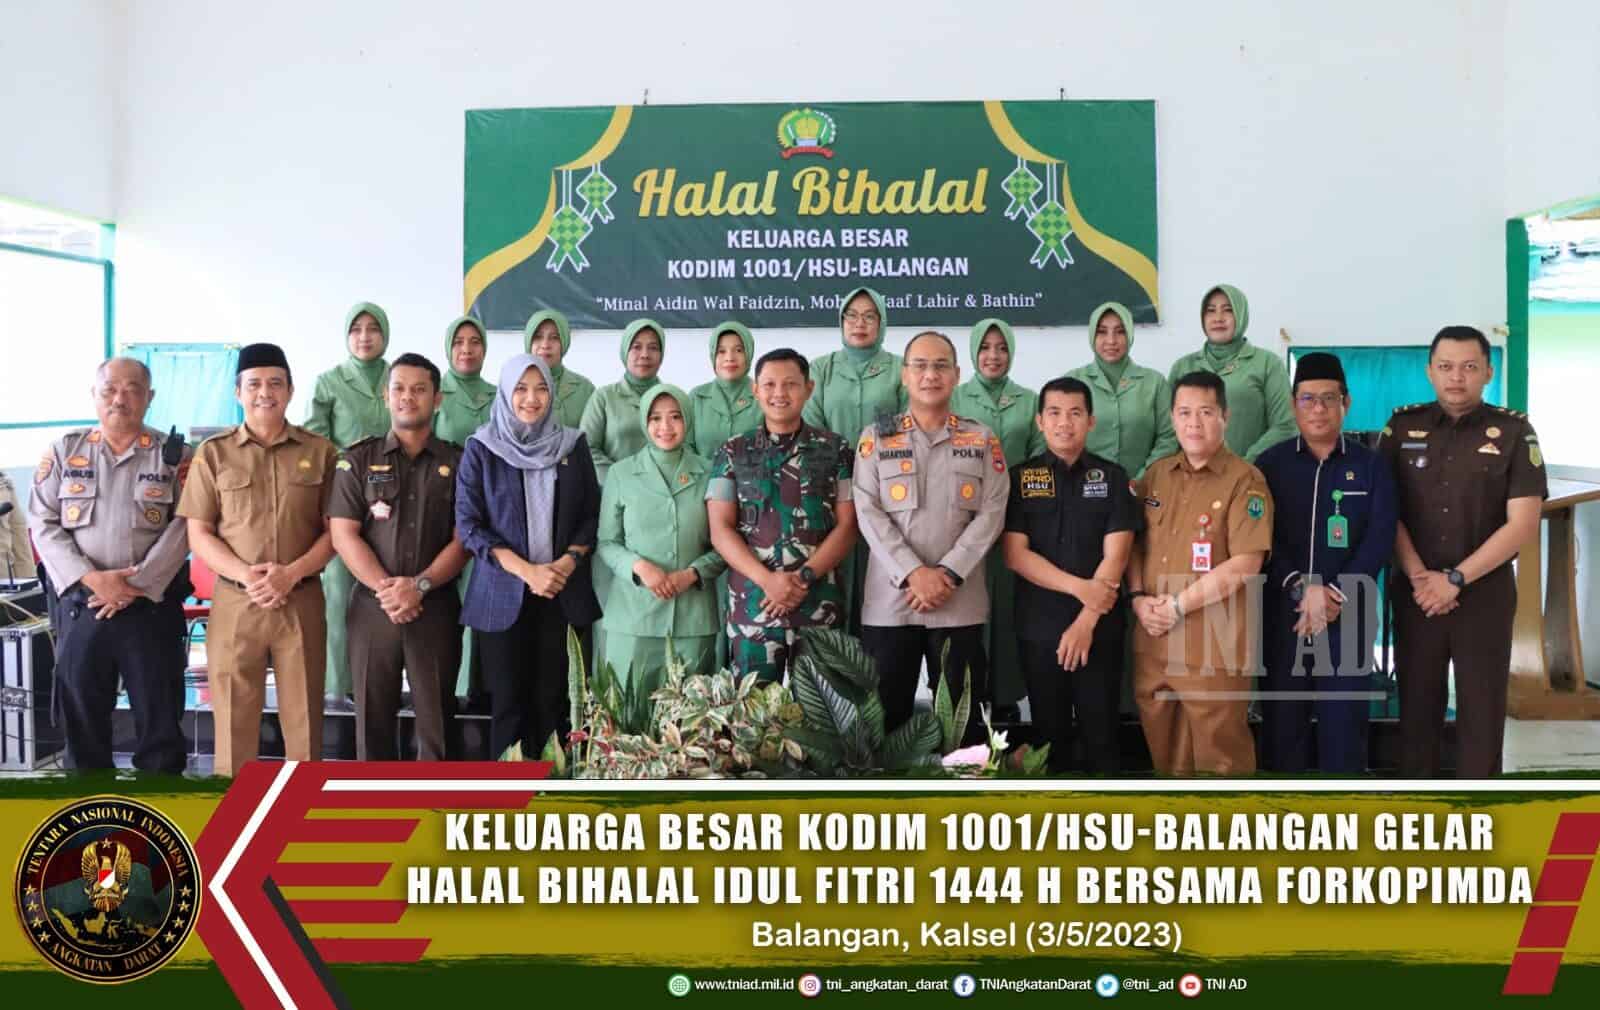 Keluarga Besar Kodim 1001/HSU-Balangan Gelar Halal Bihalal Idul Fitri 1444 H bersama Forkopimda